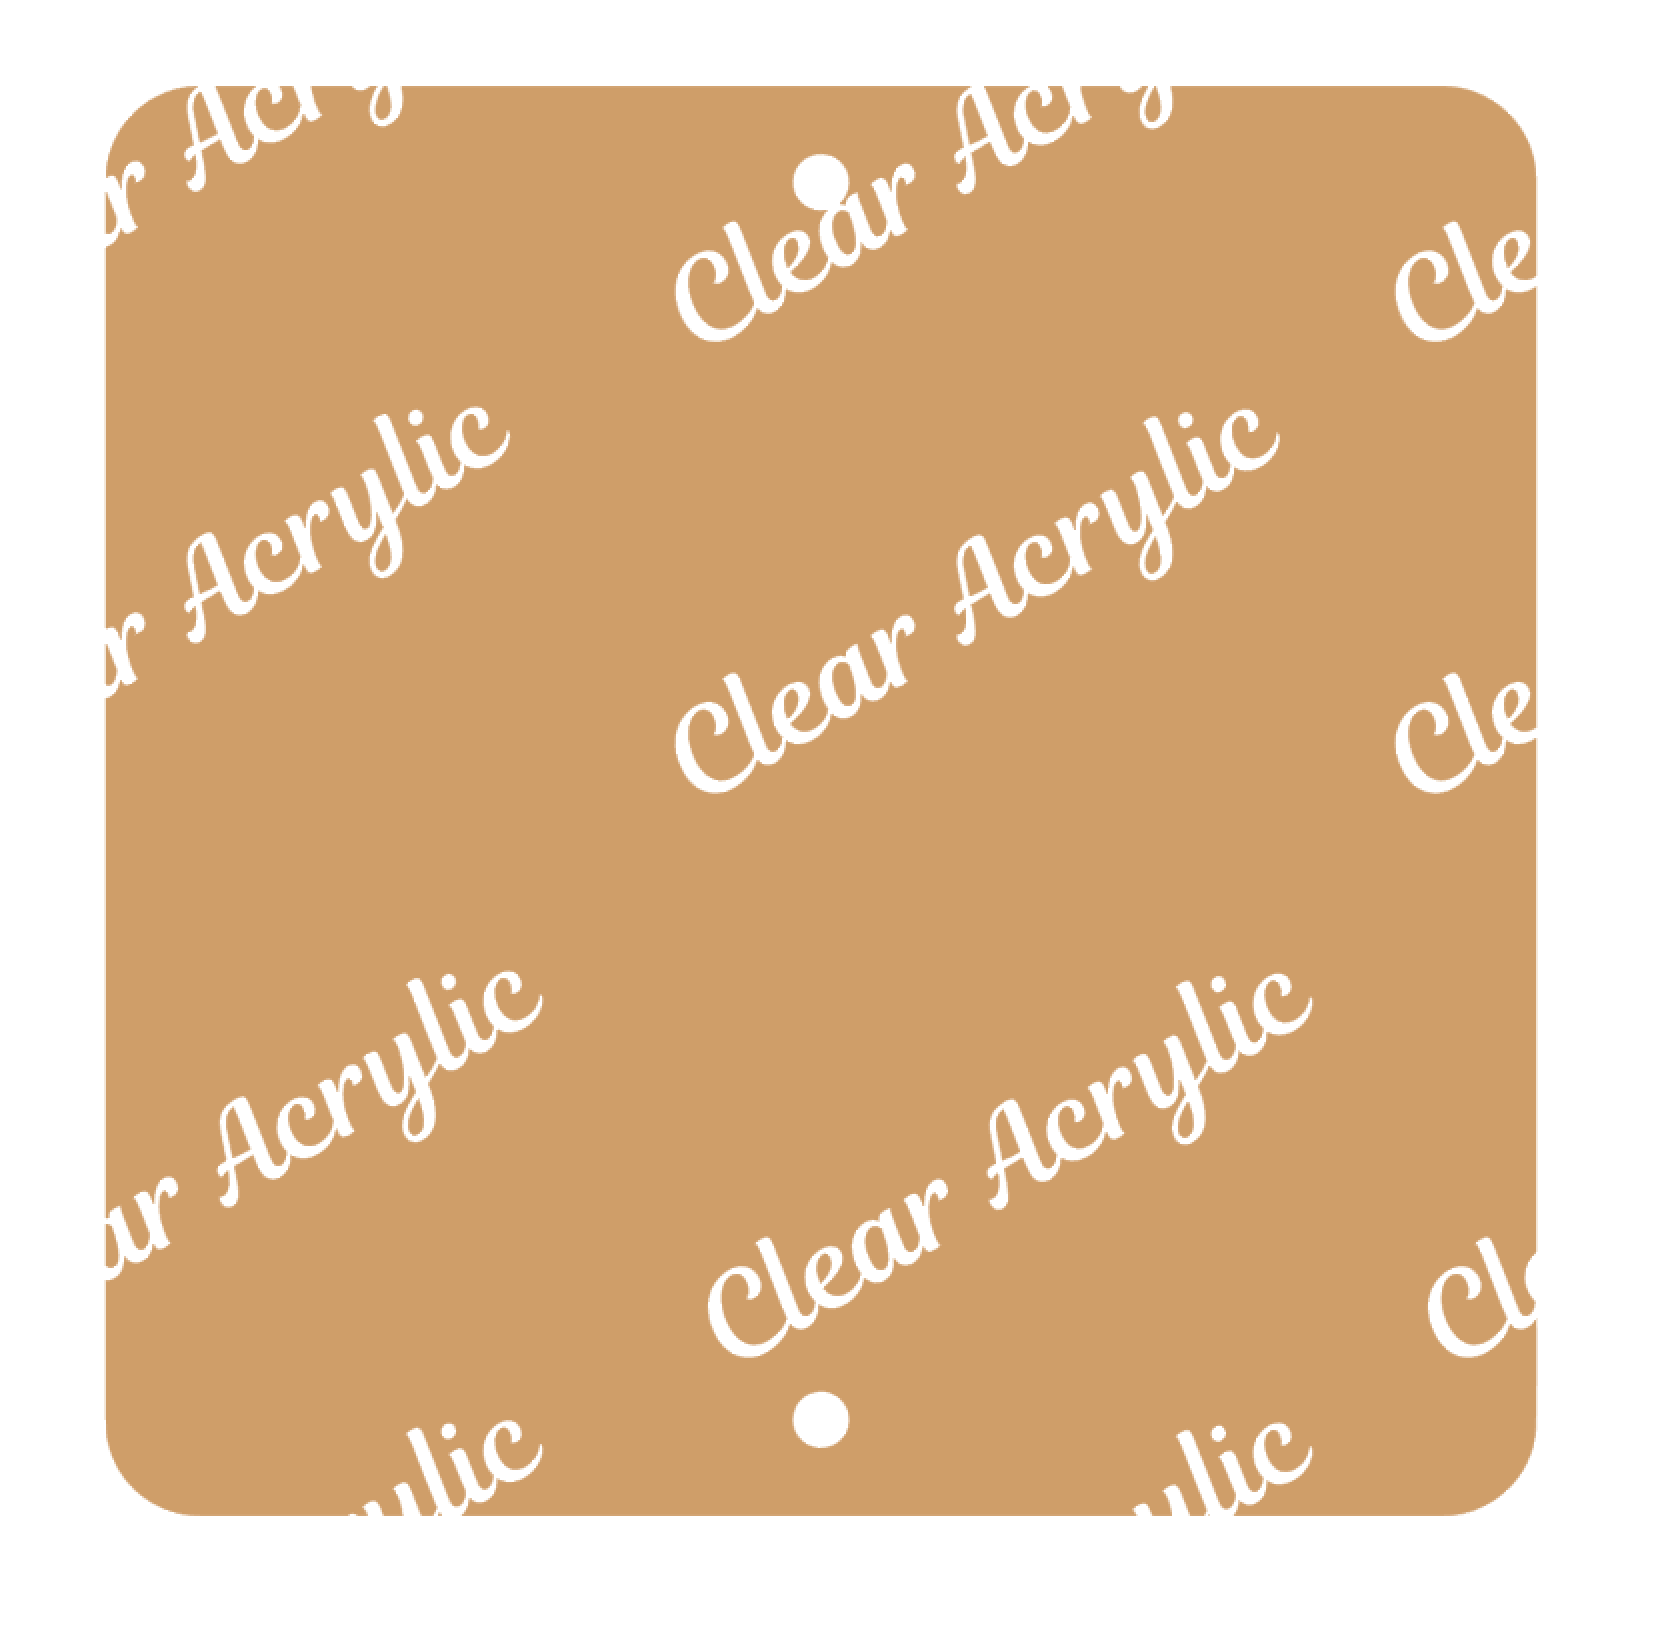 Circle acrylic blank (2 inch) –